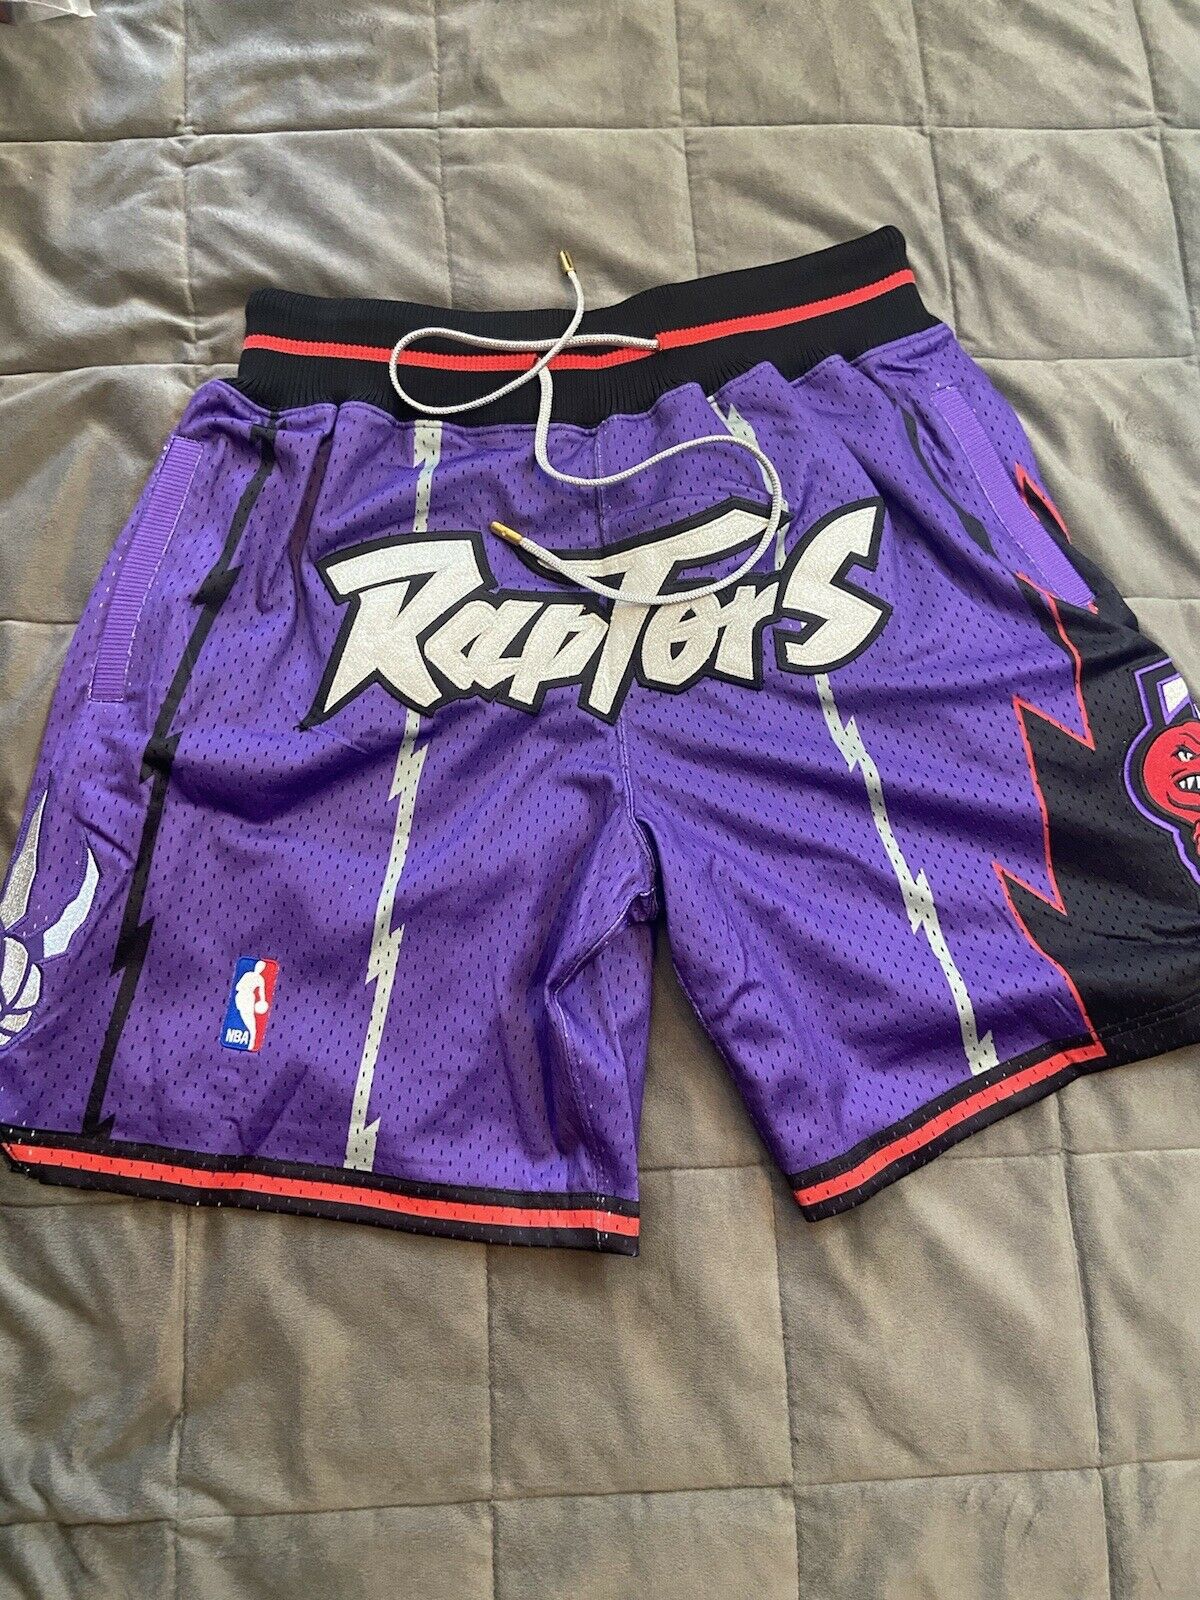 Toronto Raptors NBA Shorts for Sale in Anaheim, CA - OfferUp